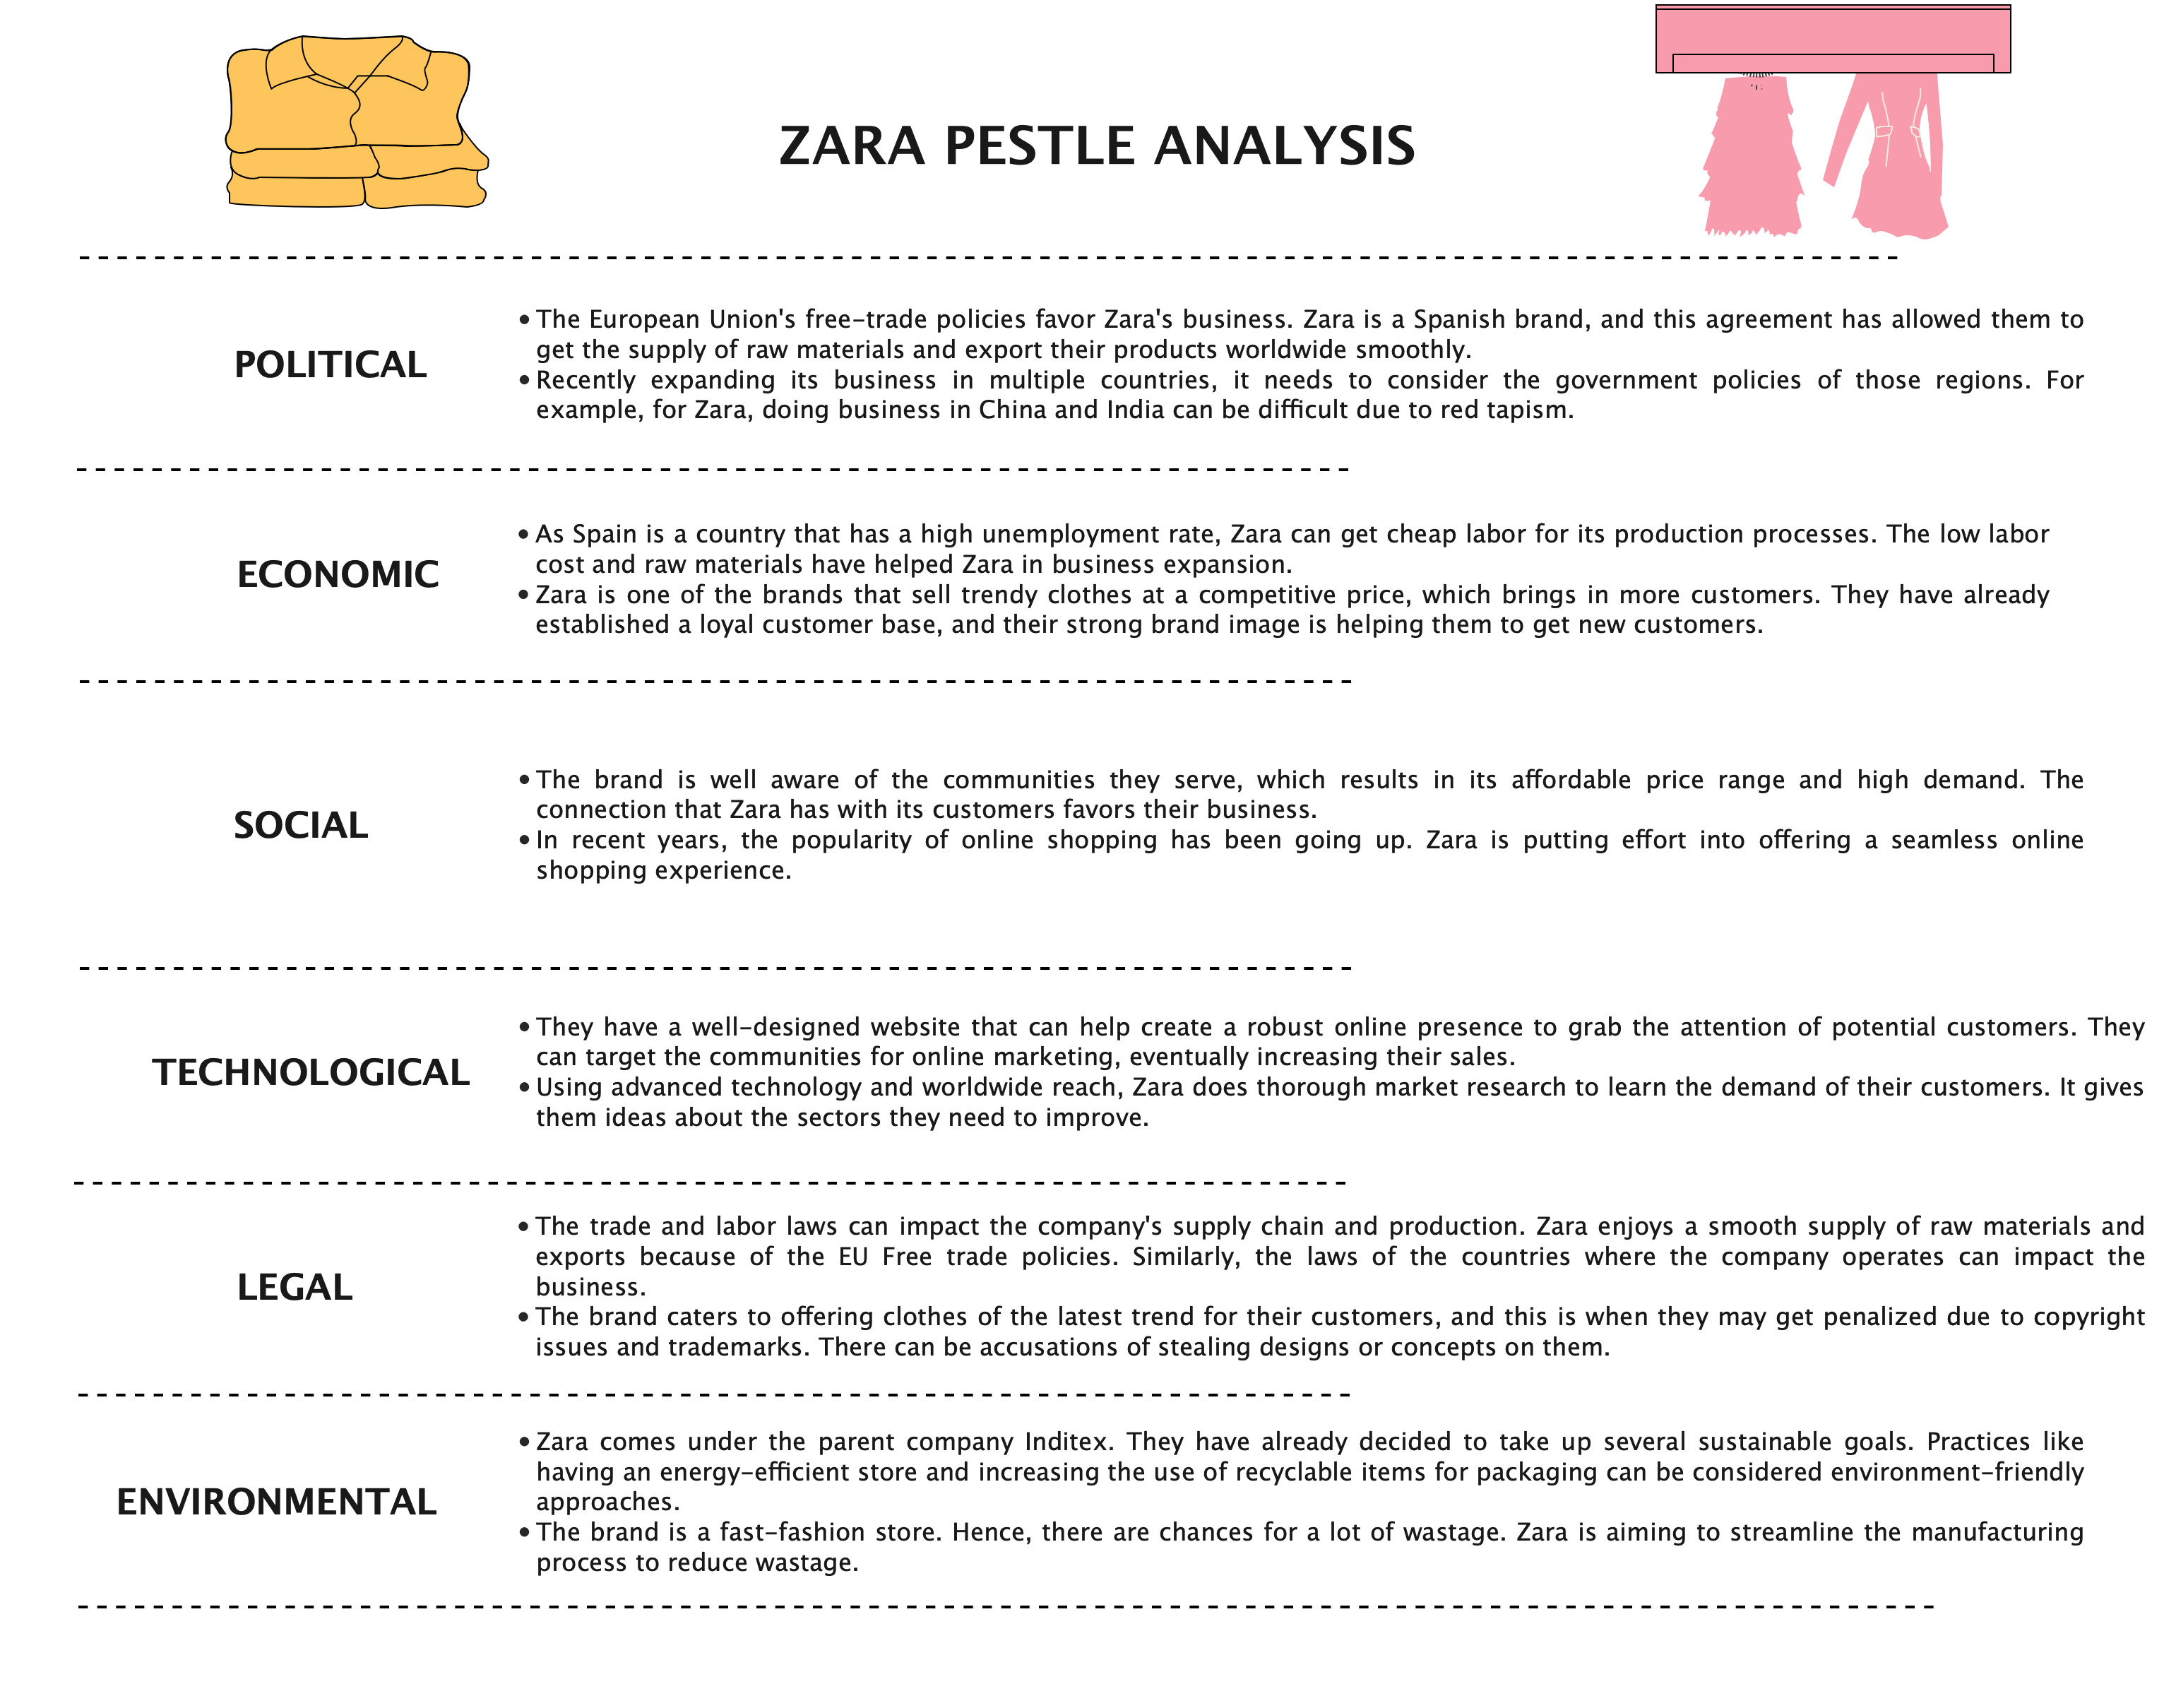 Zara PESTEL Analysis